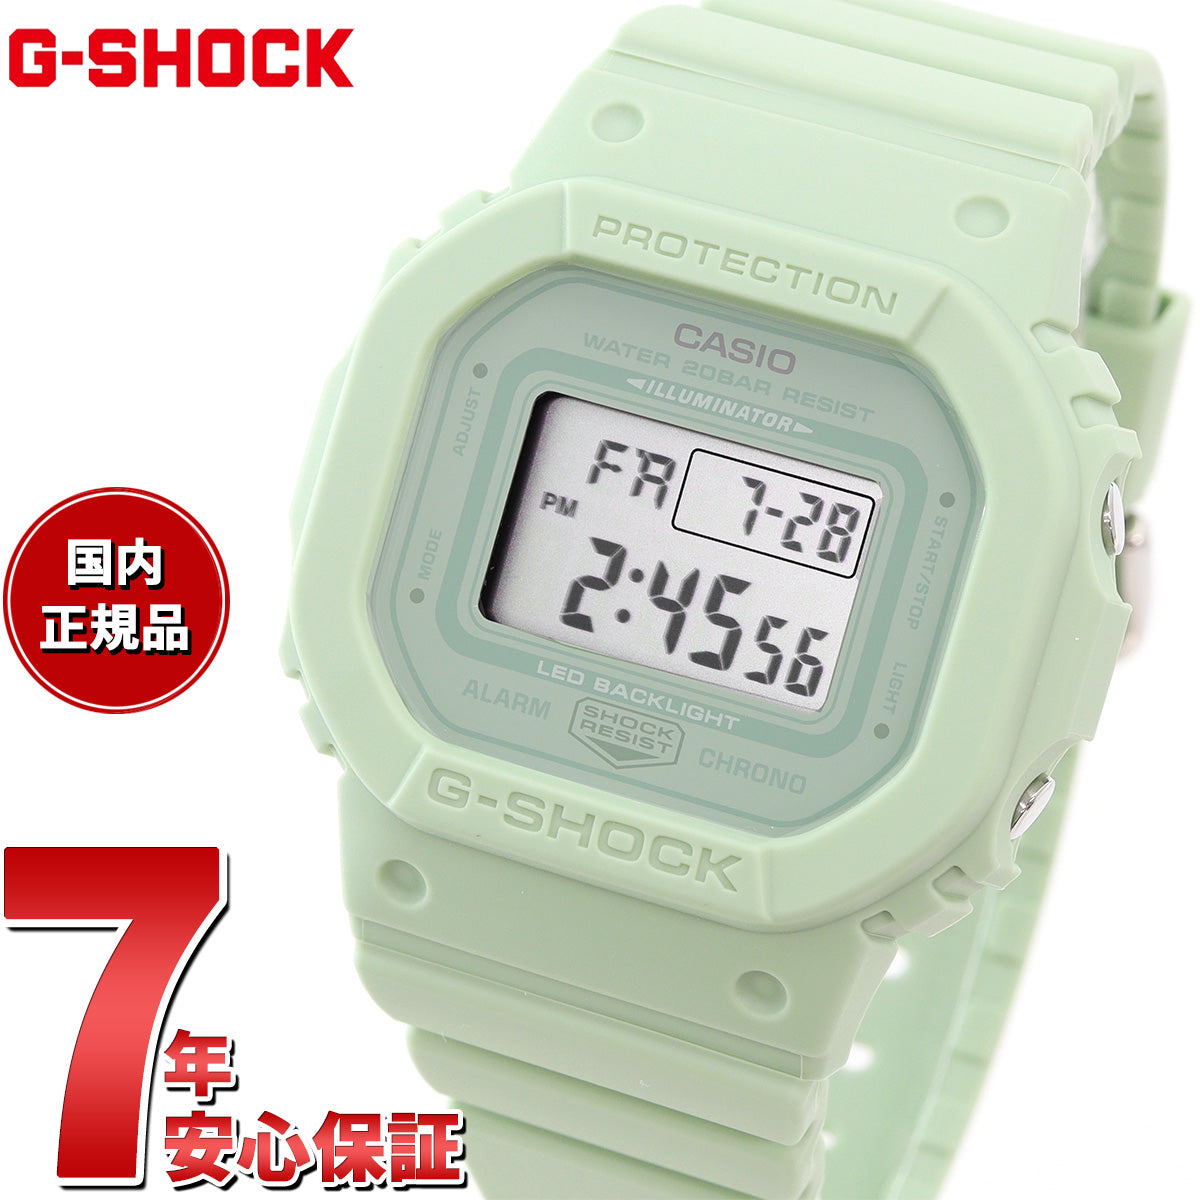 G-SHOCK デジタル カシオ Gショック CASIO デジタル 腕時計 メンズ レディース GMD-S5600BA-3JF DW-560 –  neel selectshop